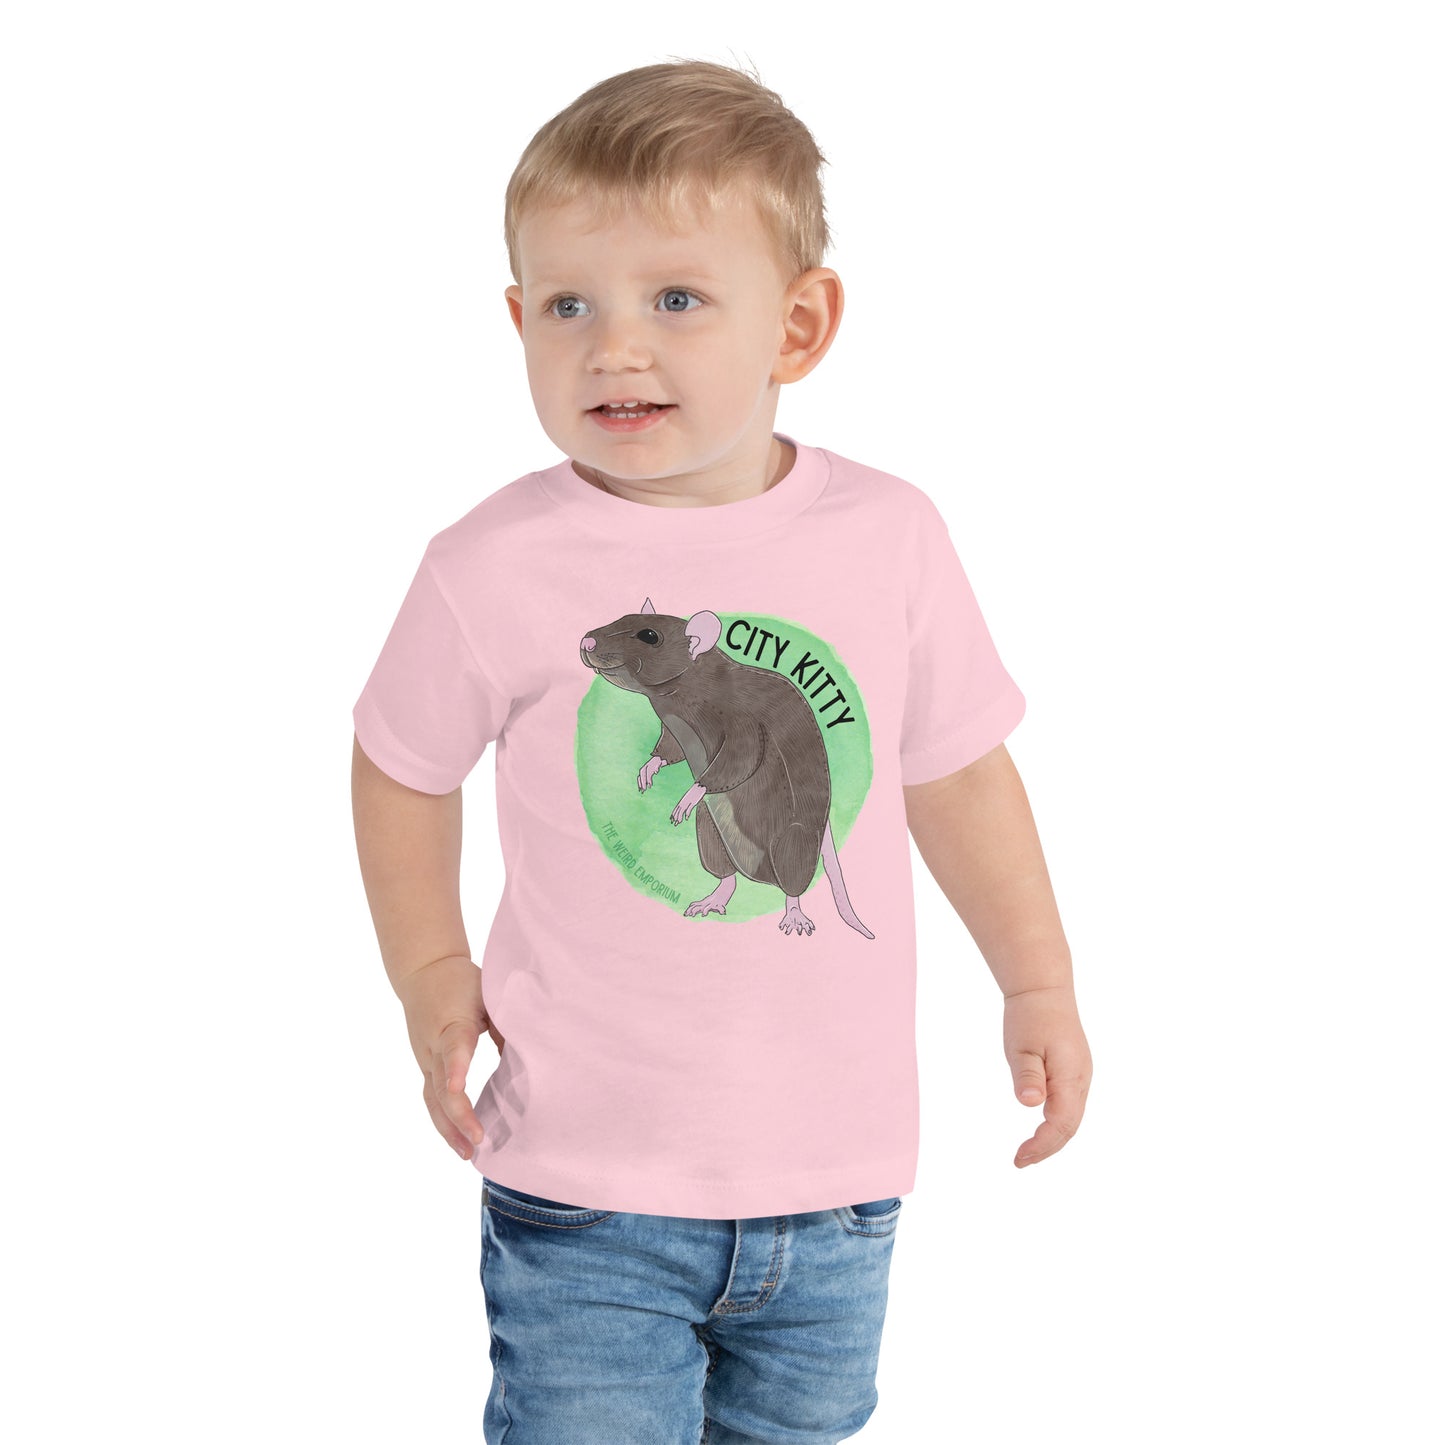 City Kitty Toddler T-Shirt